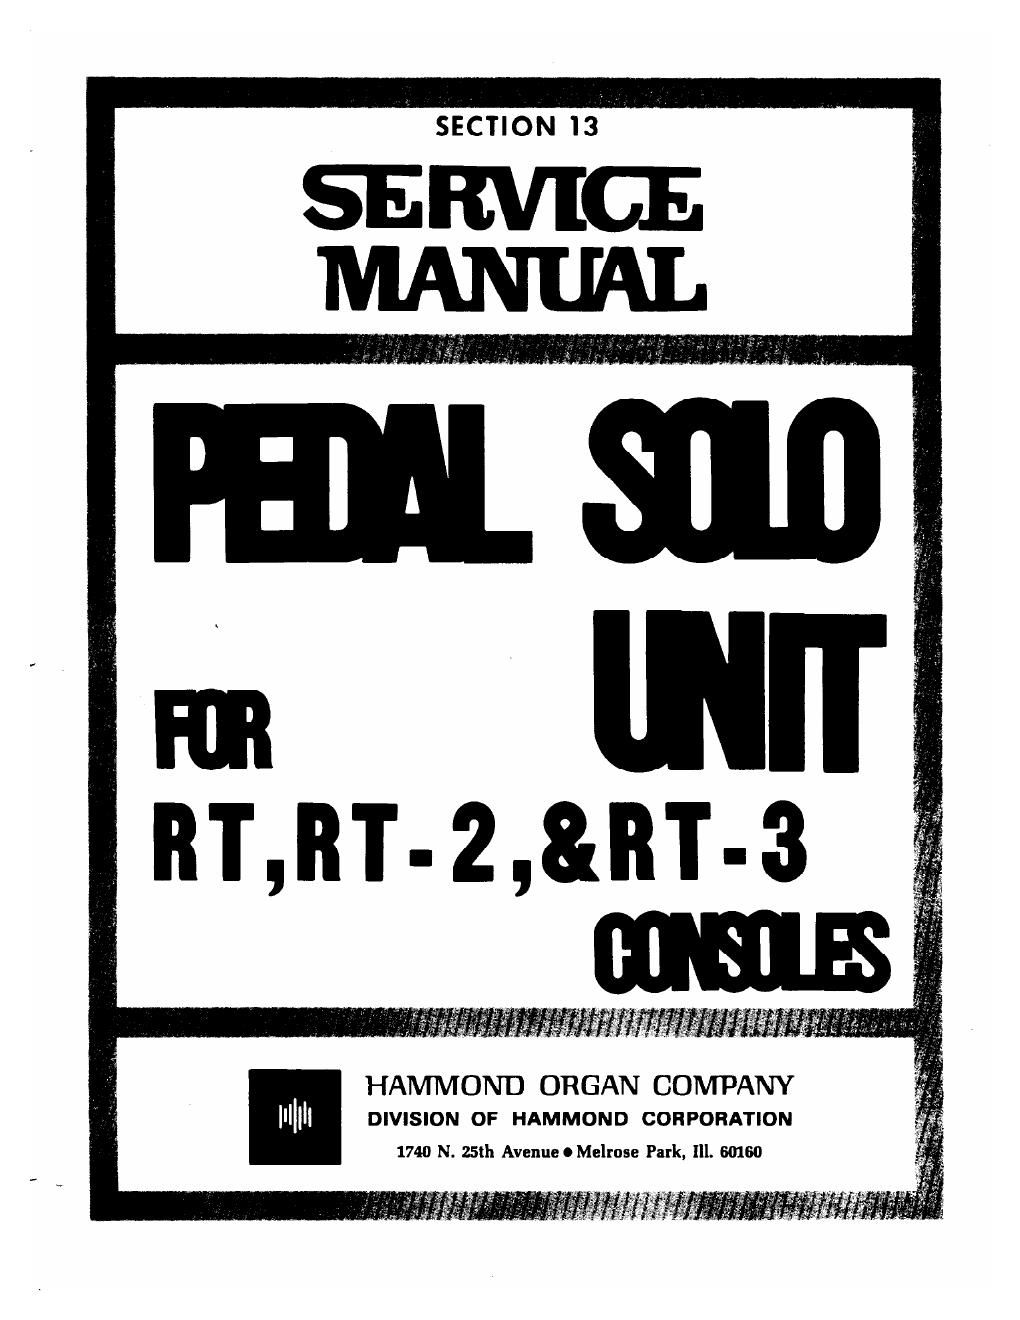 hammond pedal solo unit rt consoles service manual